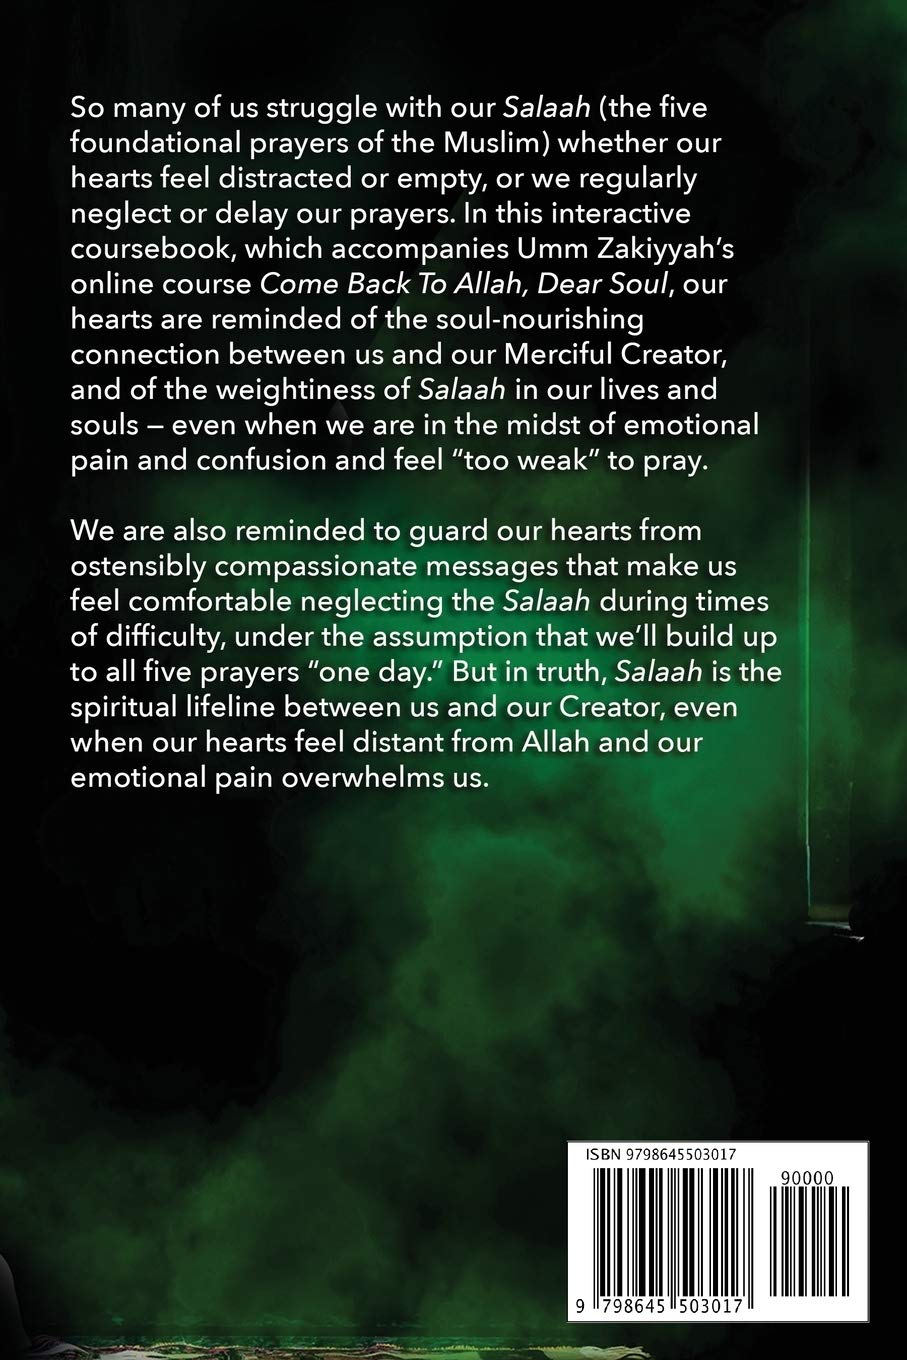 Come Back To Allah Dear Soul - A Salaah Coursebook